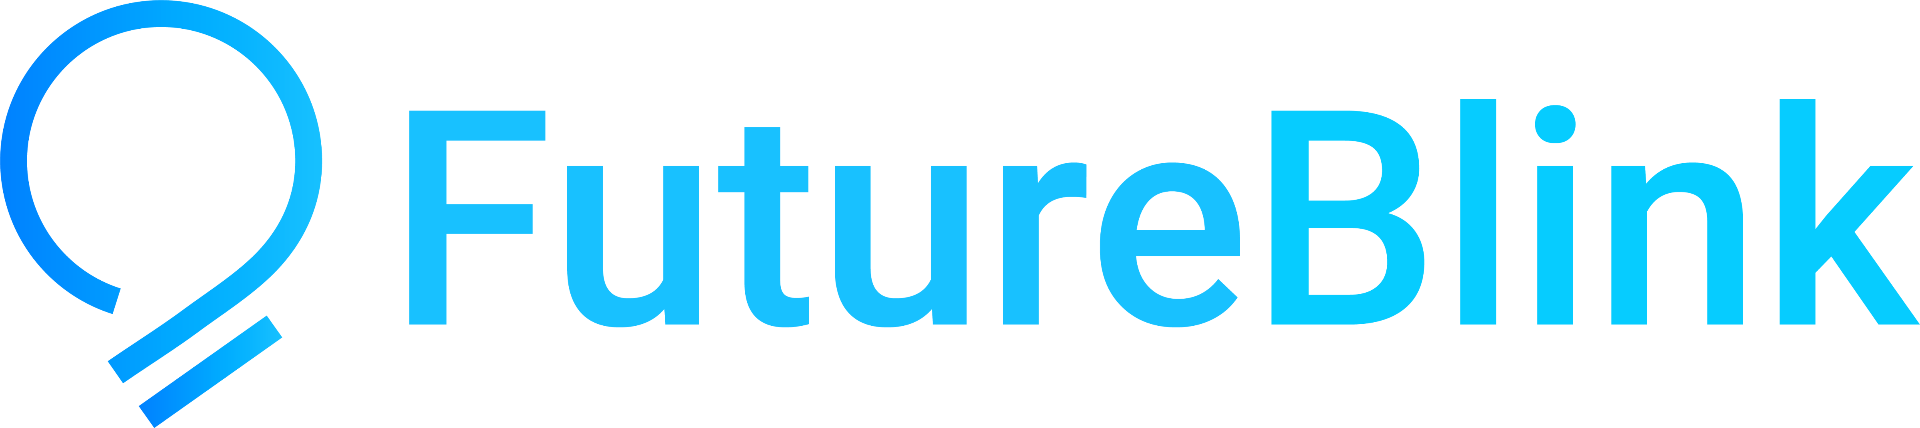 futureblink logo